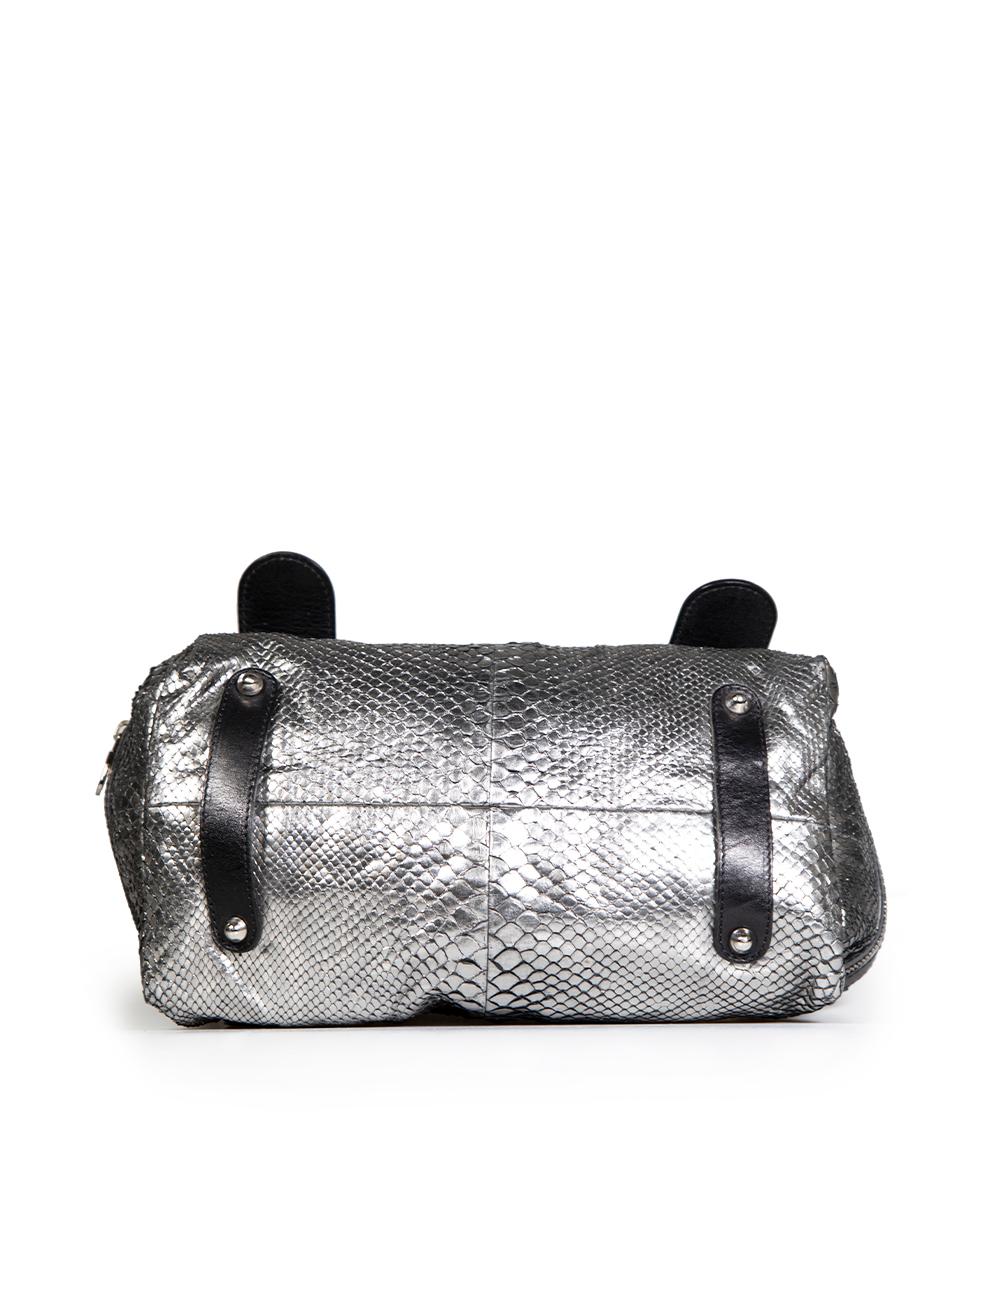 Women's Chloé Silver Python Buckle Handbag For Sale